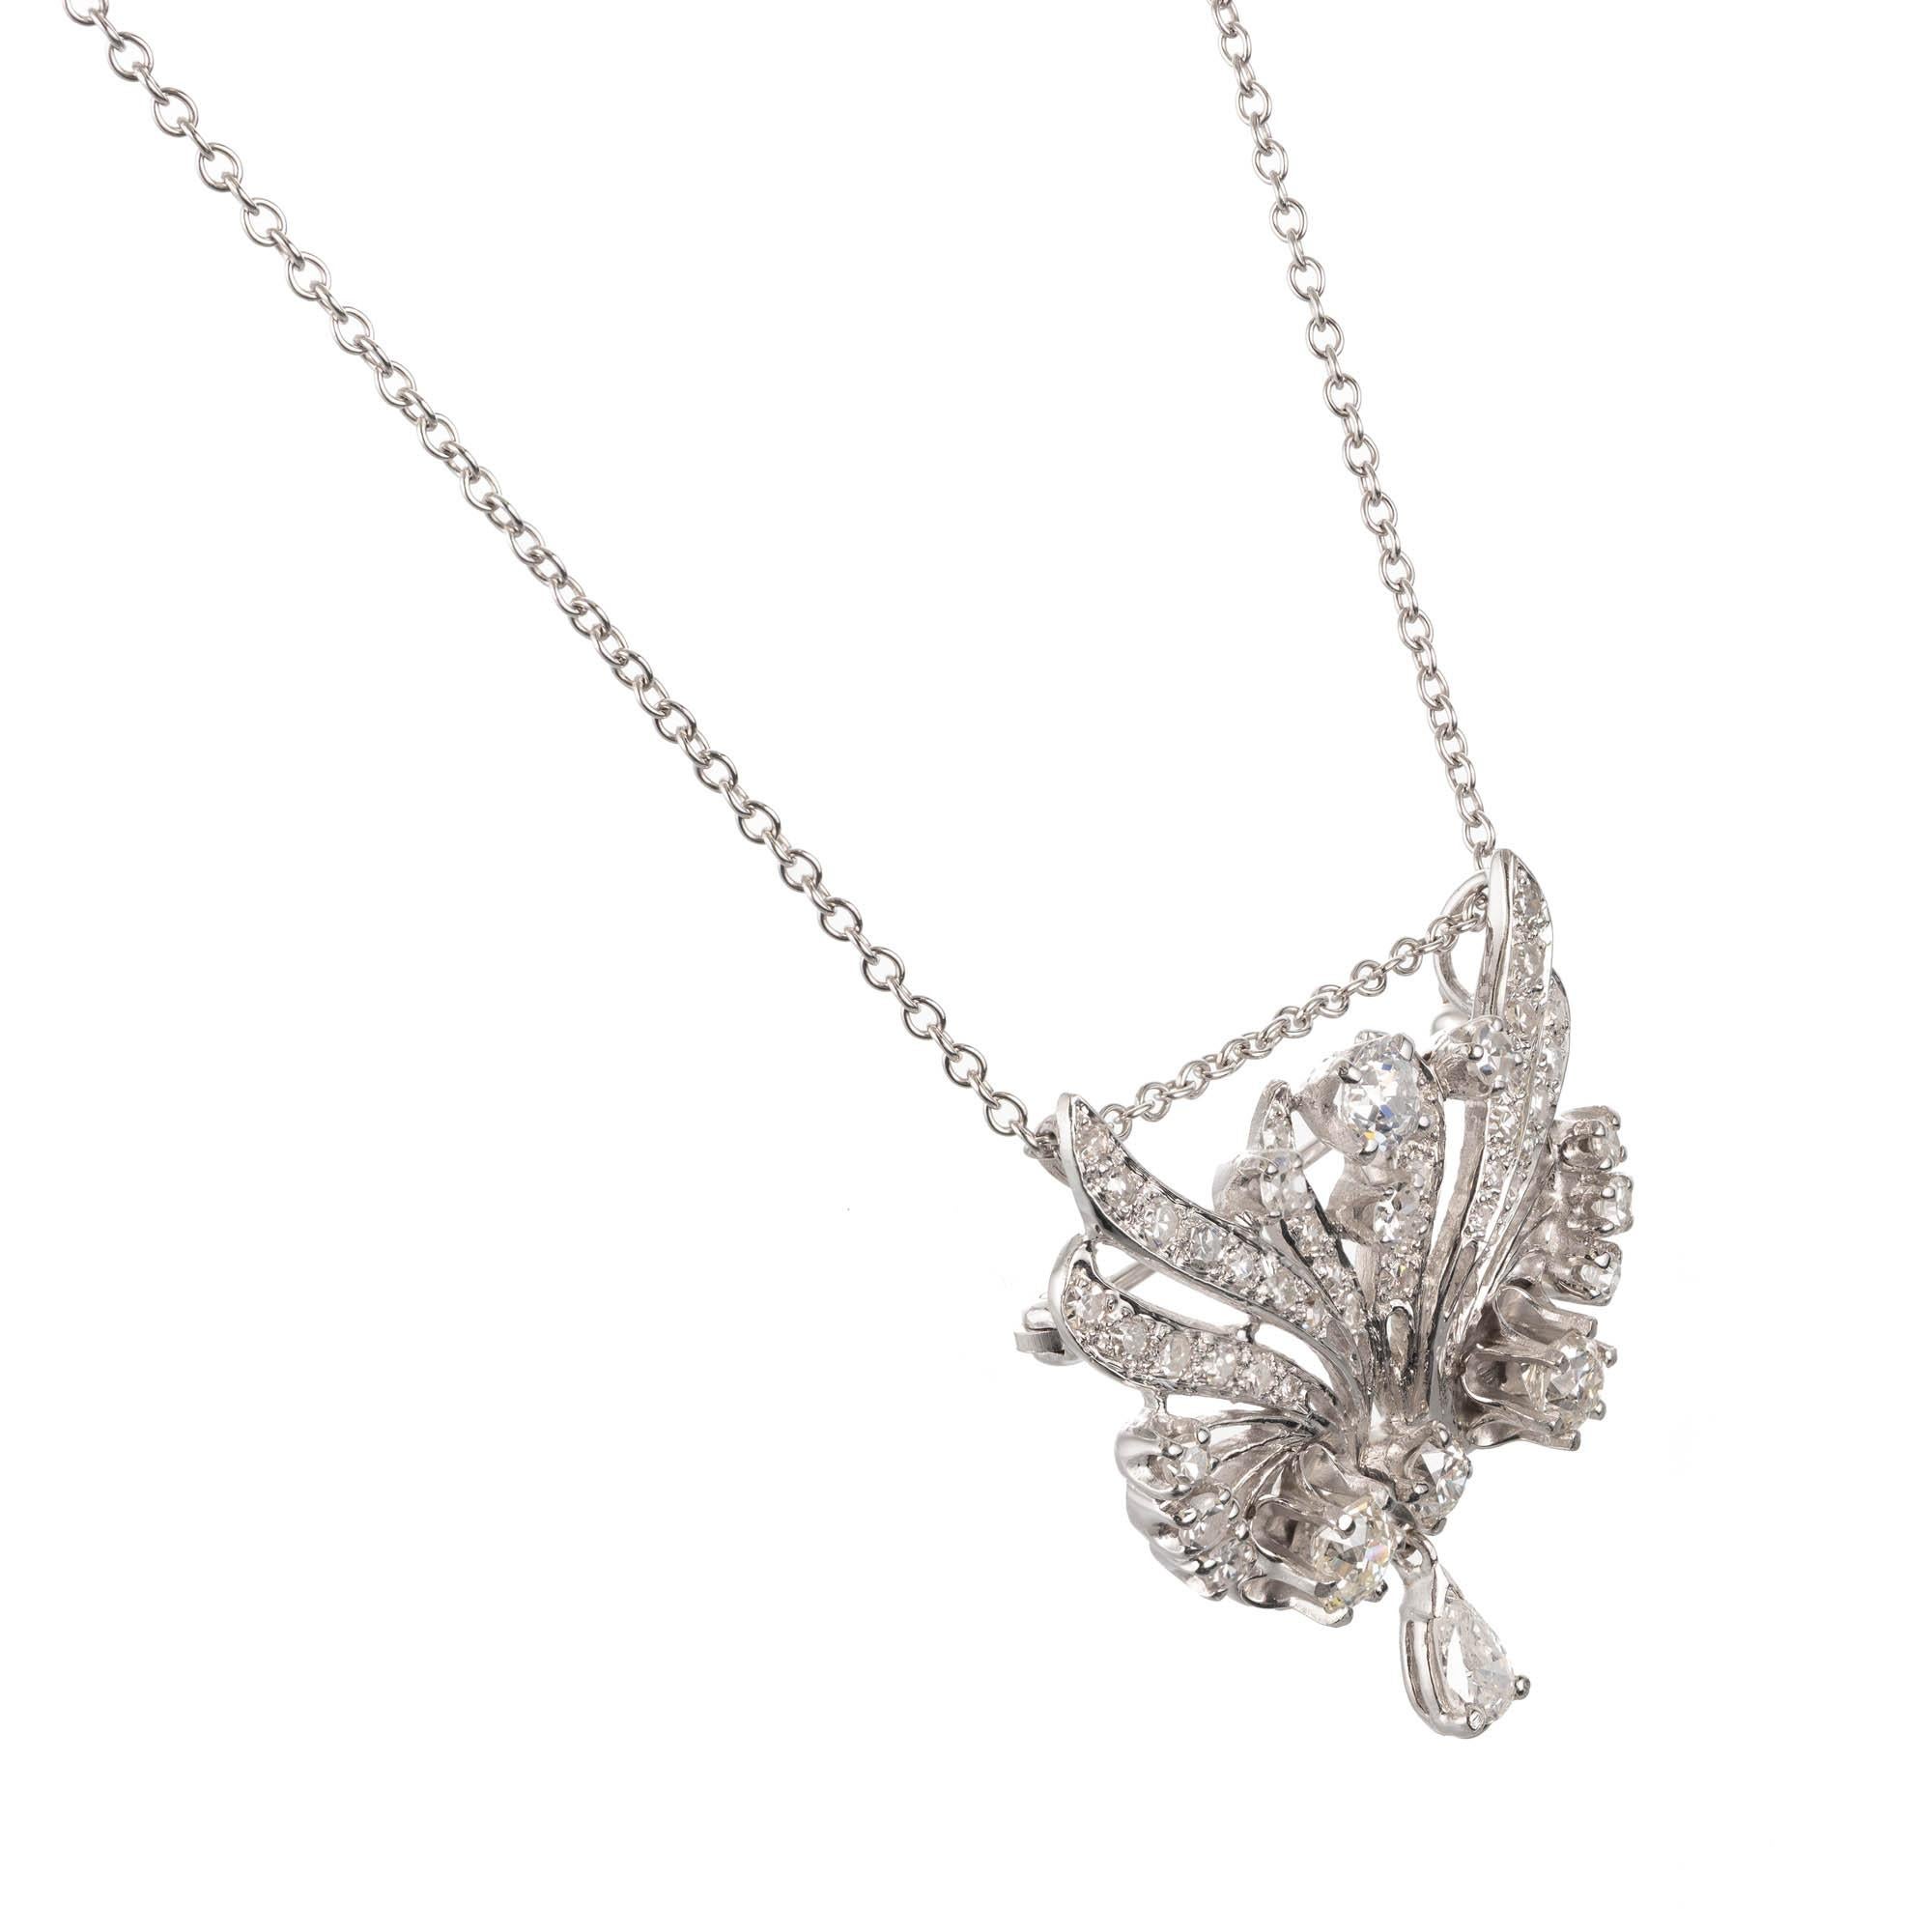 Vintage 1960's 1.85 carat diamond pendant necklace brooch in 14k white gold. 

1 pear shape K-L I diamond, Approximate .25 carats 
4 old European cut I-j VS-SI diamonds, Approximate 1.05 carats
35 single cut I-J SI diamonds, Approximate .55 carats